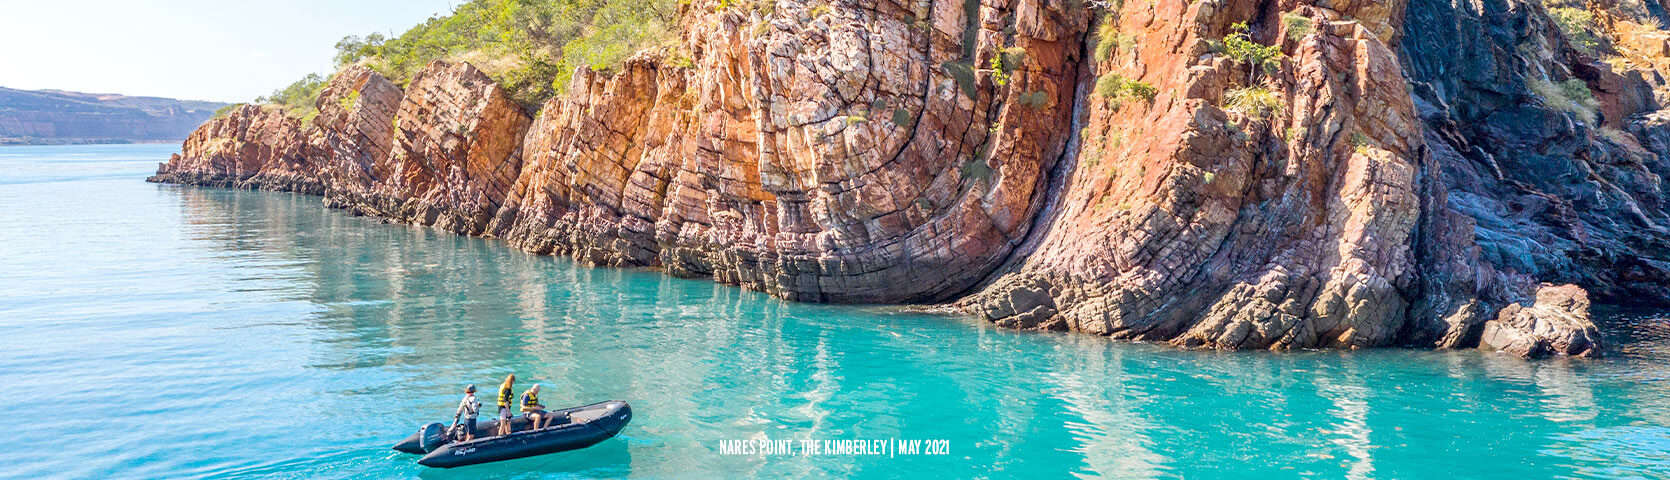 Nares-Point,-the-Kimberley-Cruise-Western-Australia